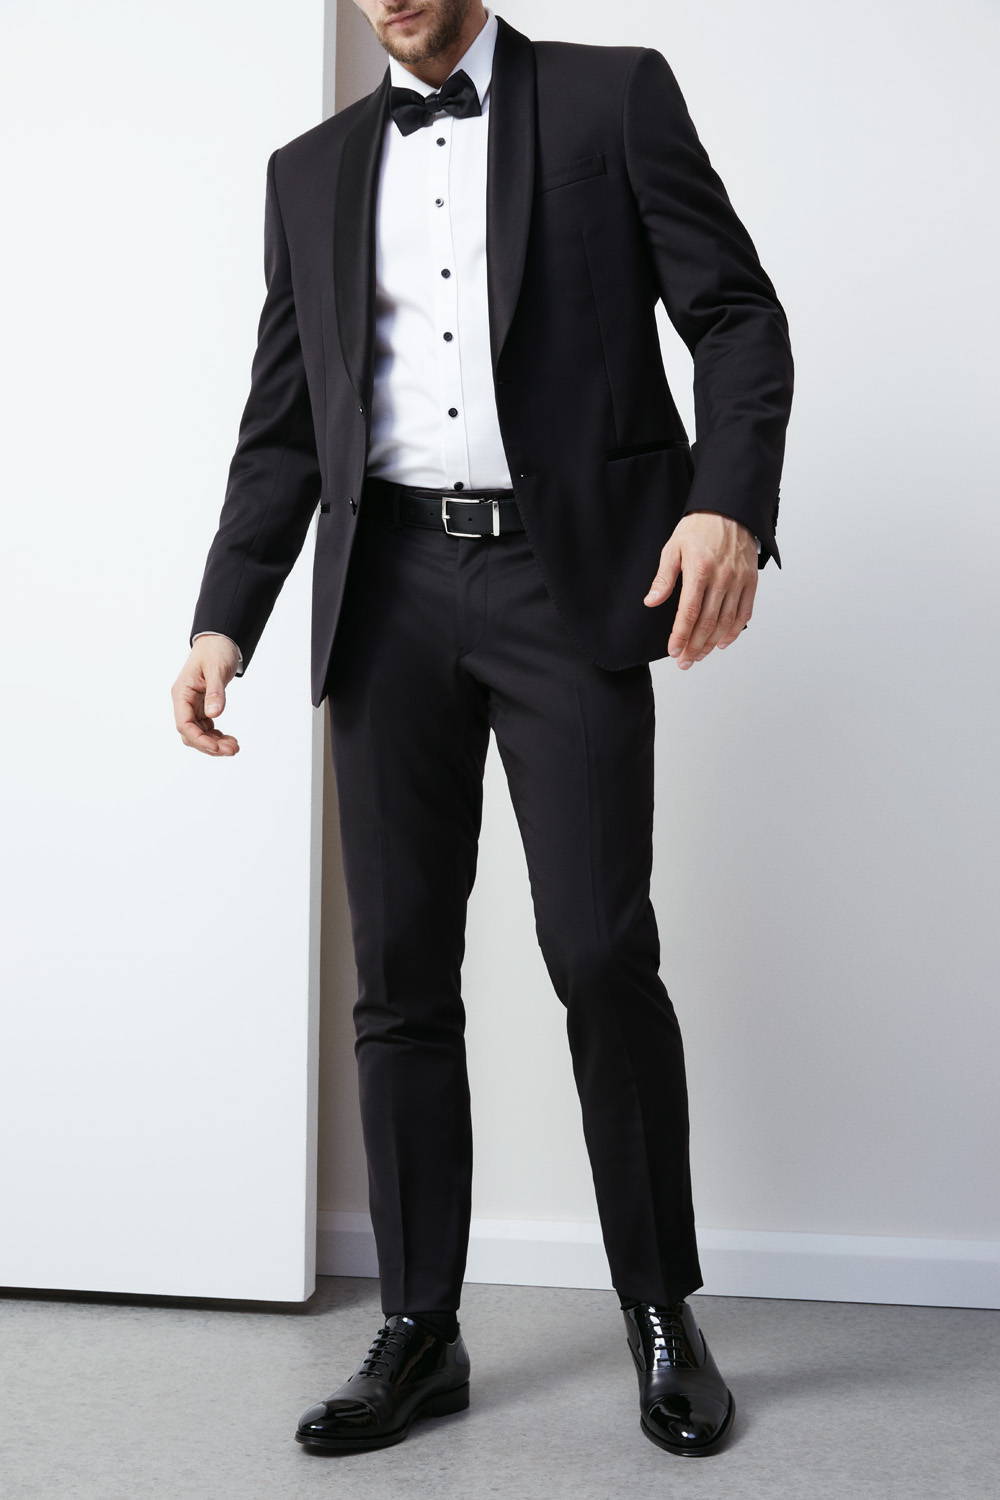 Groom Tuxedo Style